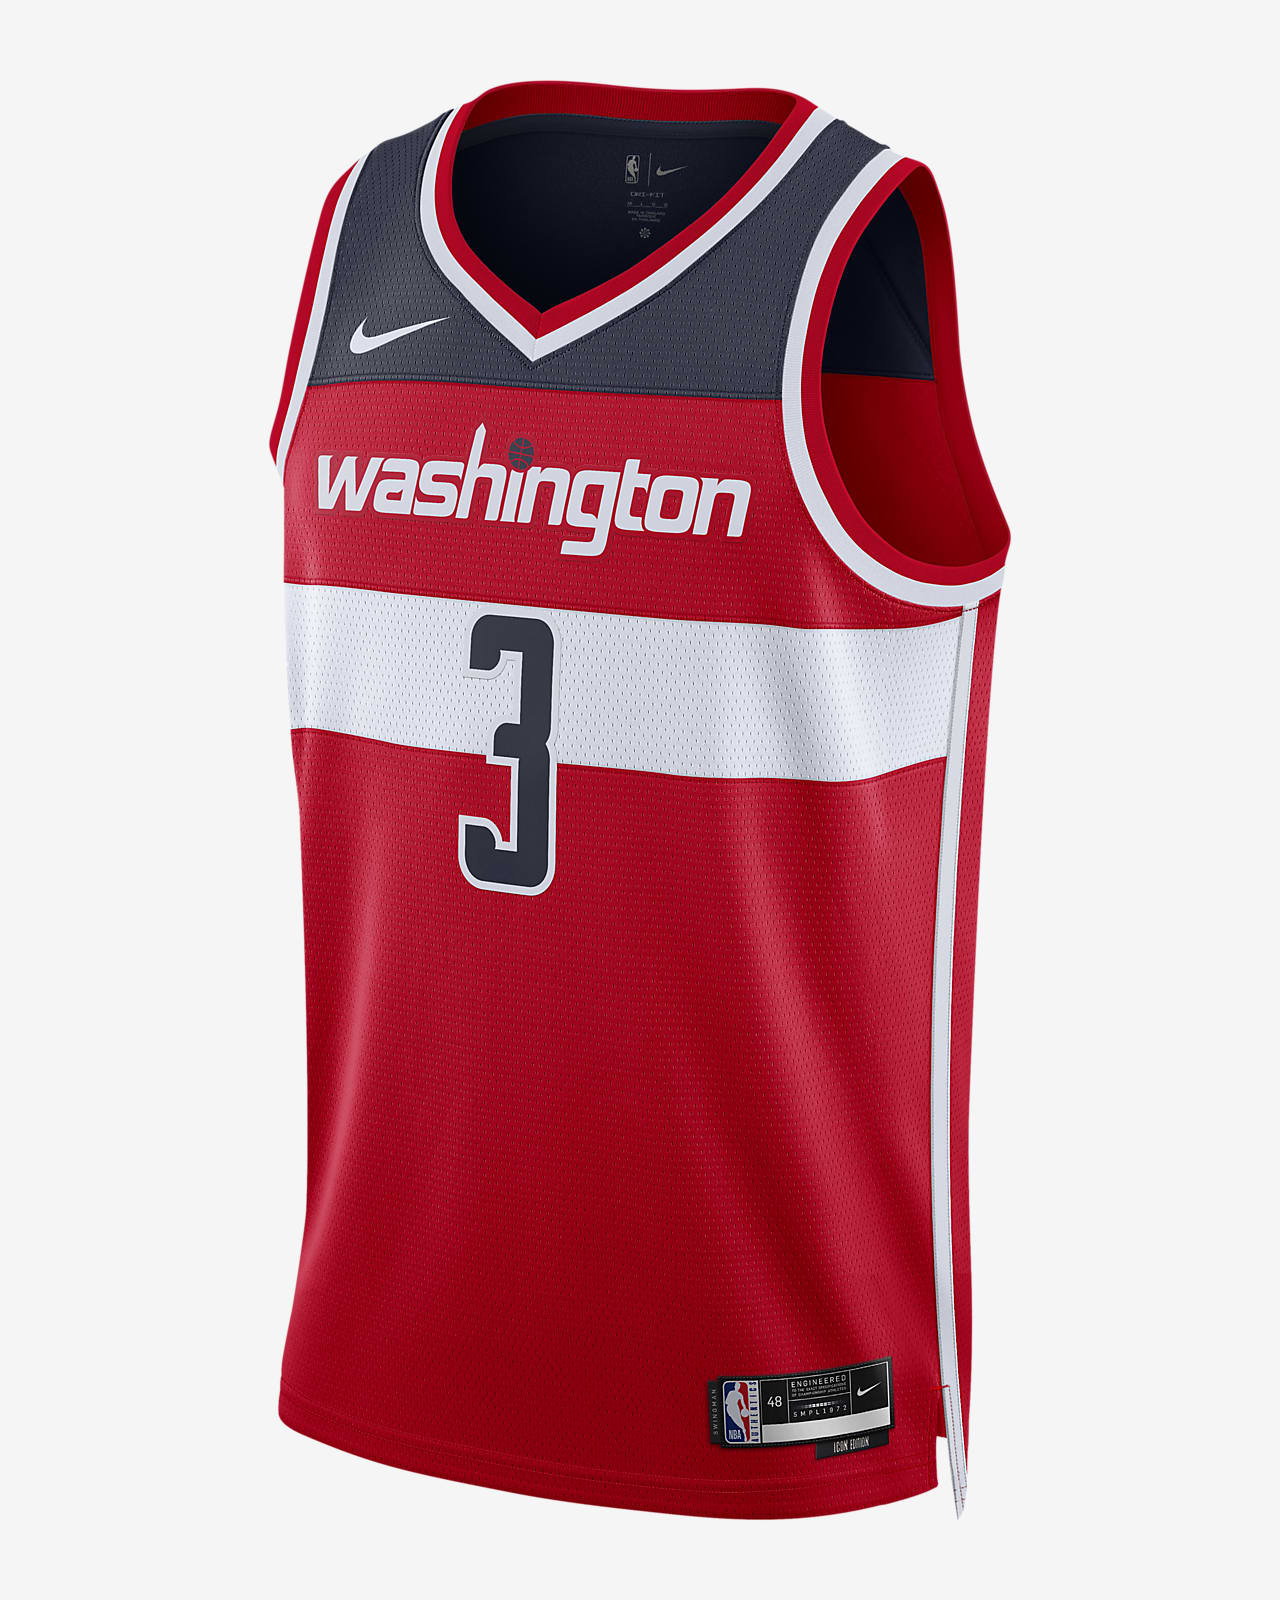 Washington Wizards Jerseys, Swingman Jersey, Wizards City Edition